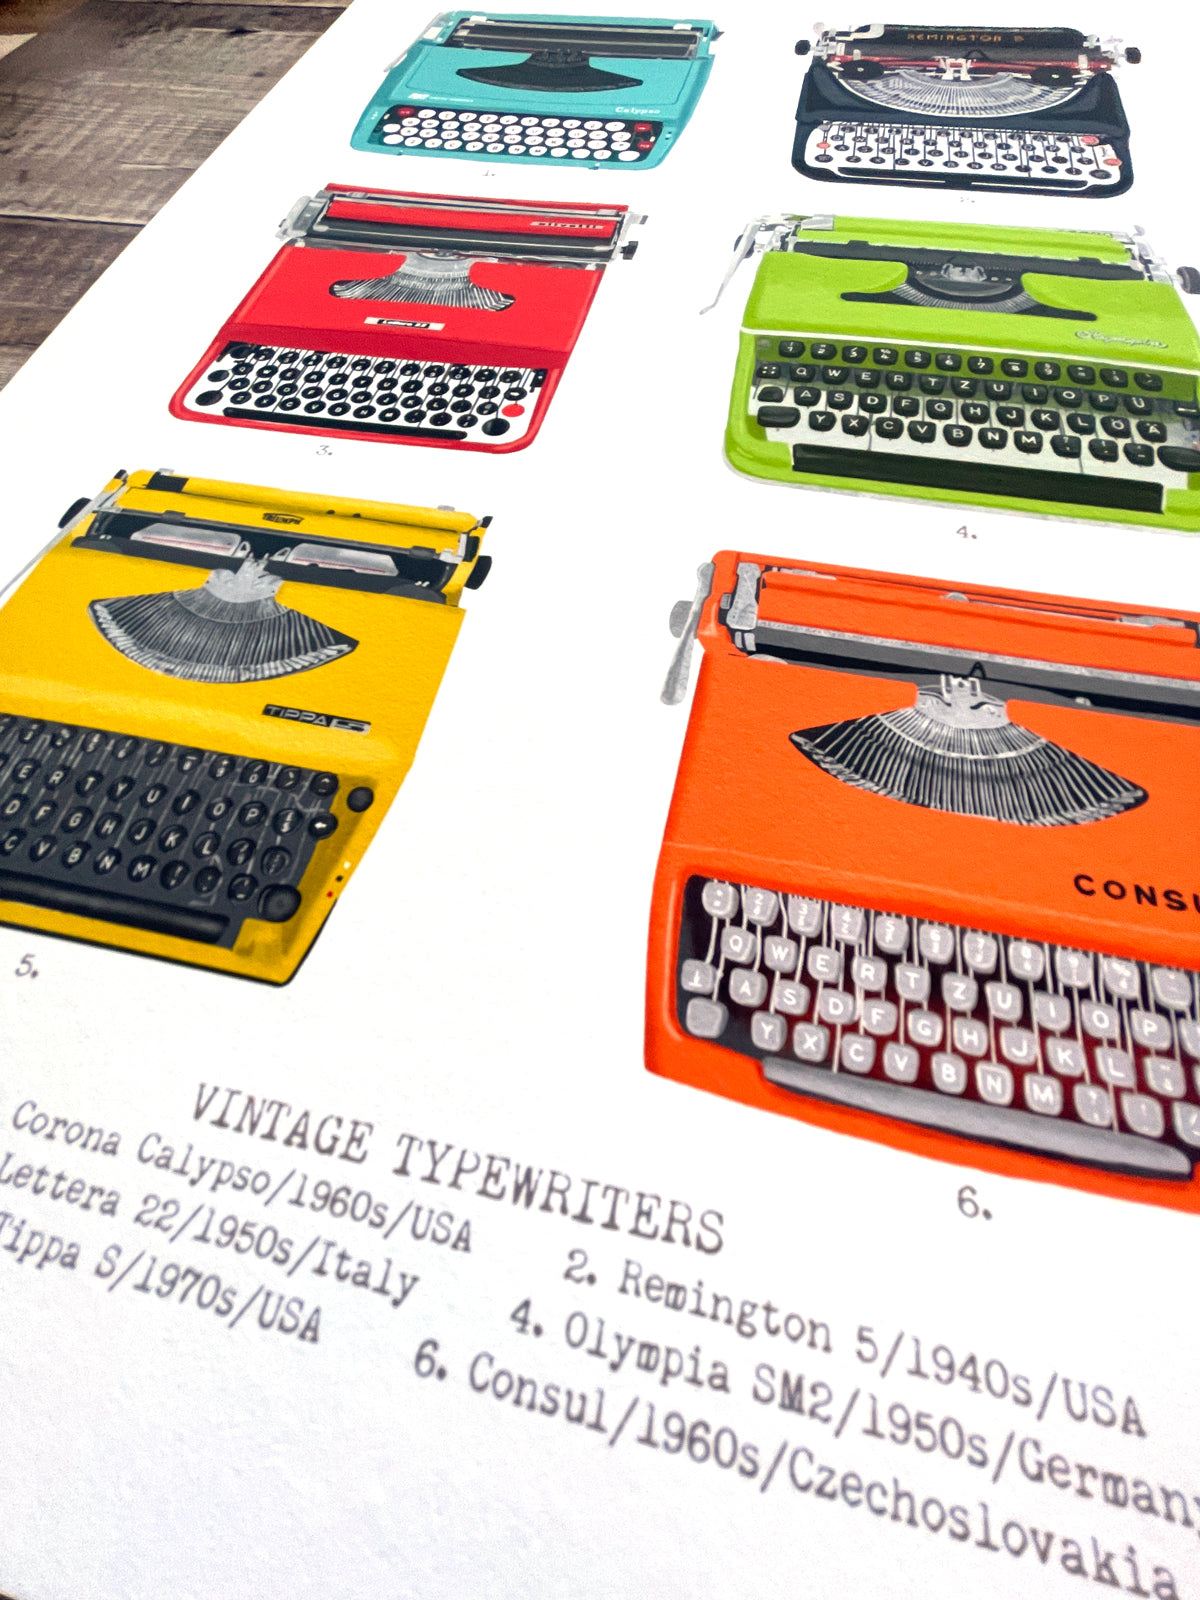 Vintage Typewriters limited edition giclee art print